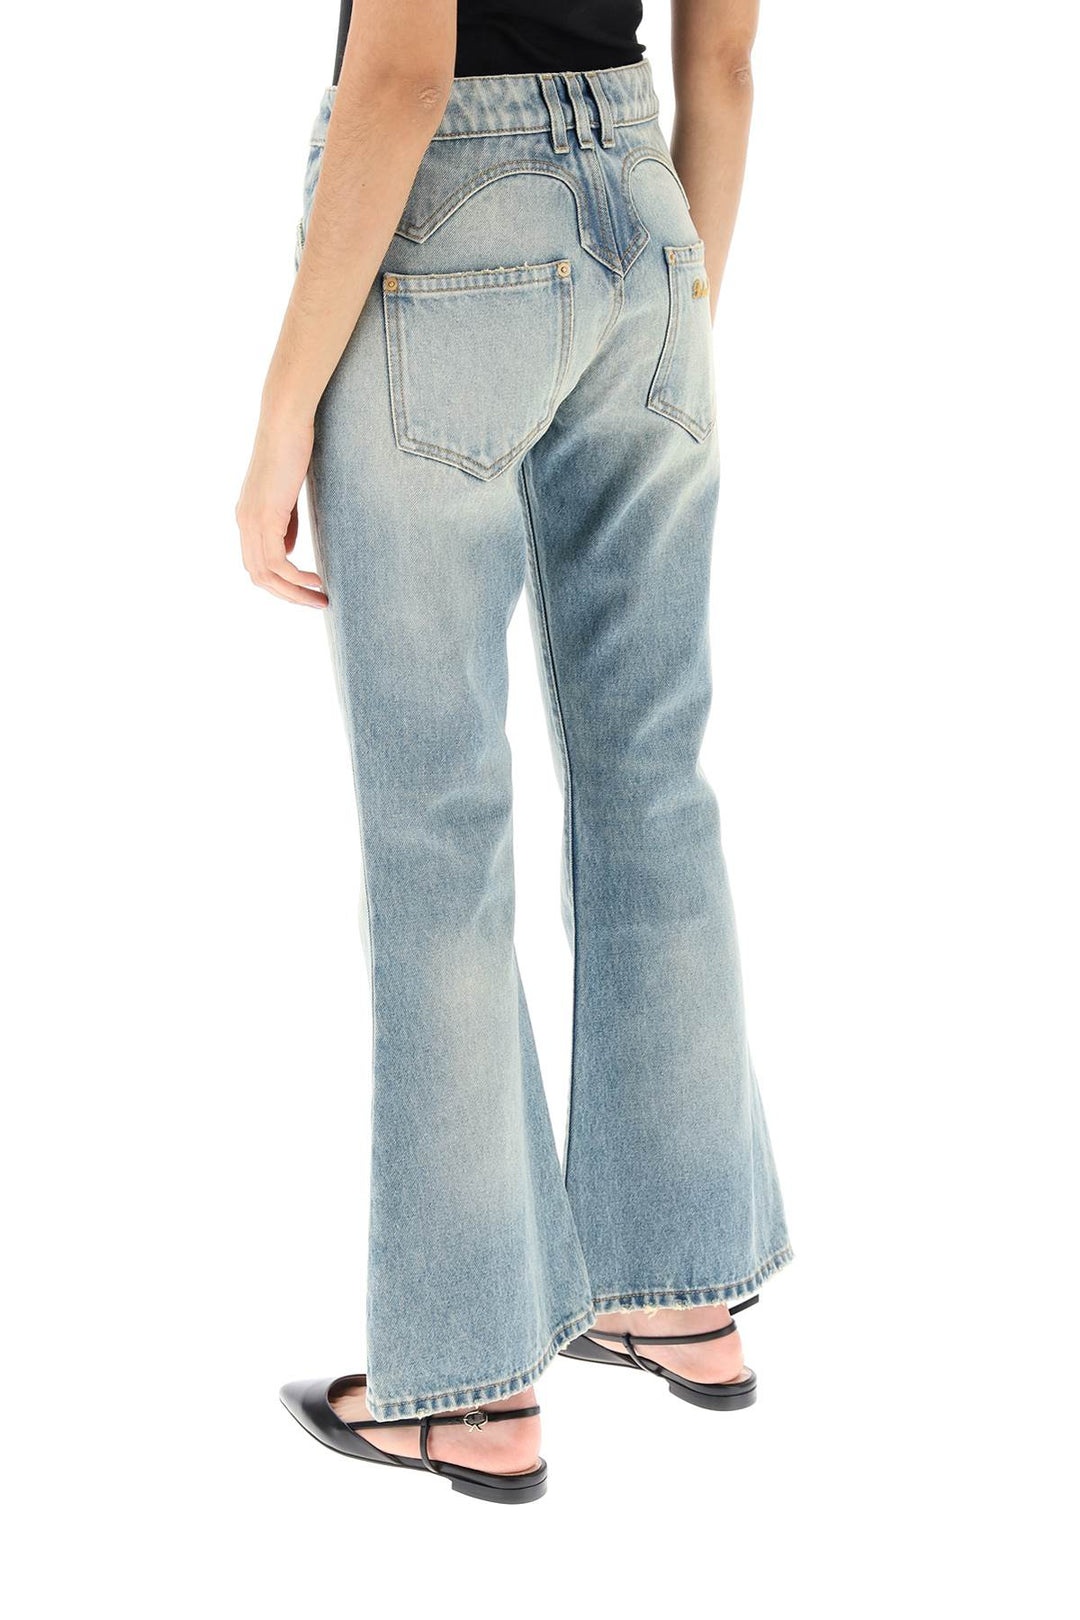 Balmain Western Style Crop Bootcut Jeans   Celeste